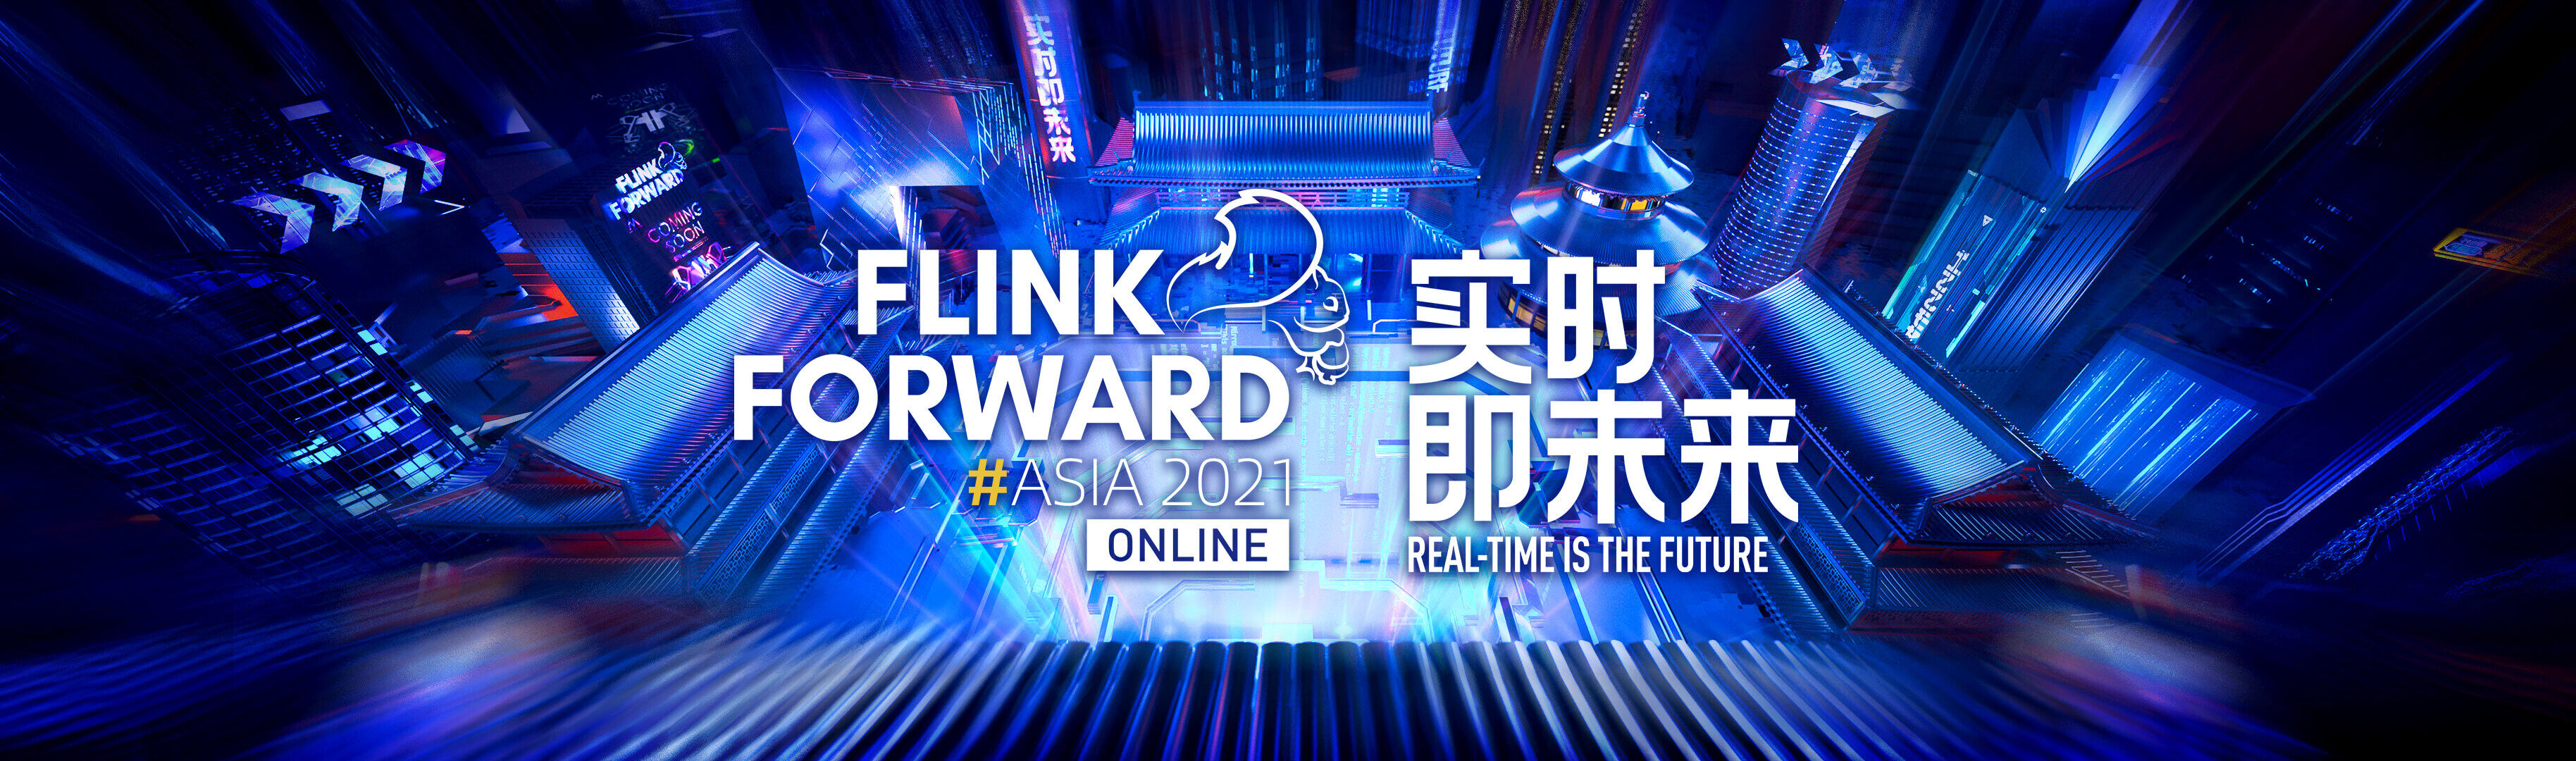 从 Flink Forward Asia 2021，看Flink未来开启新篇章